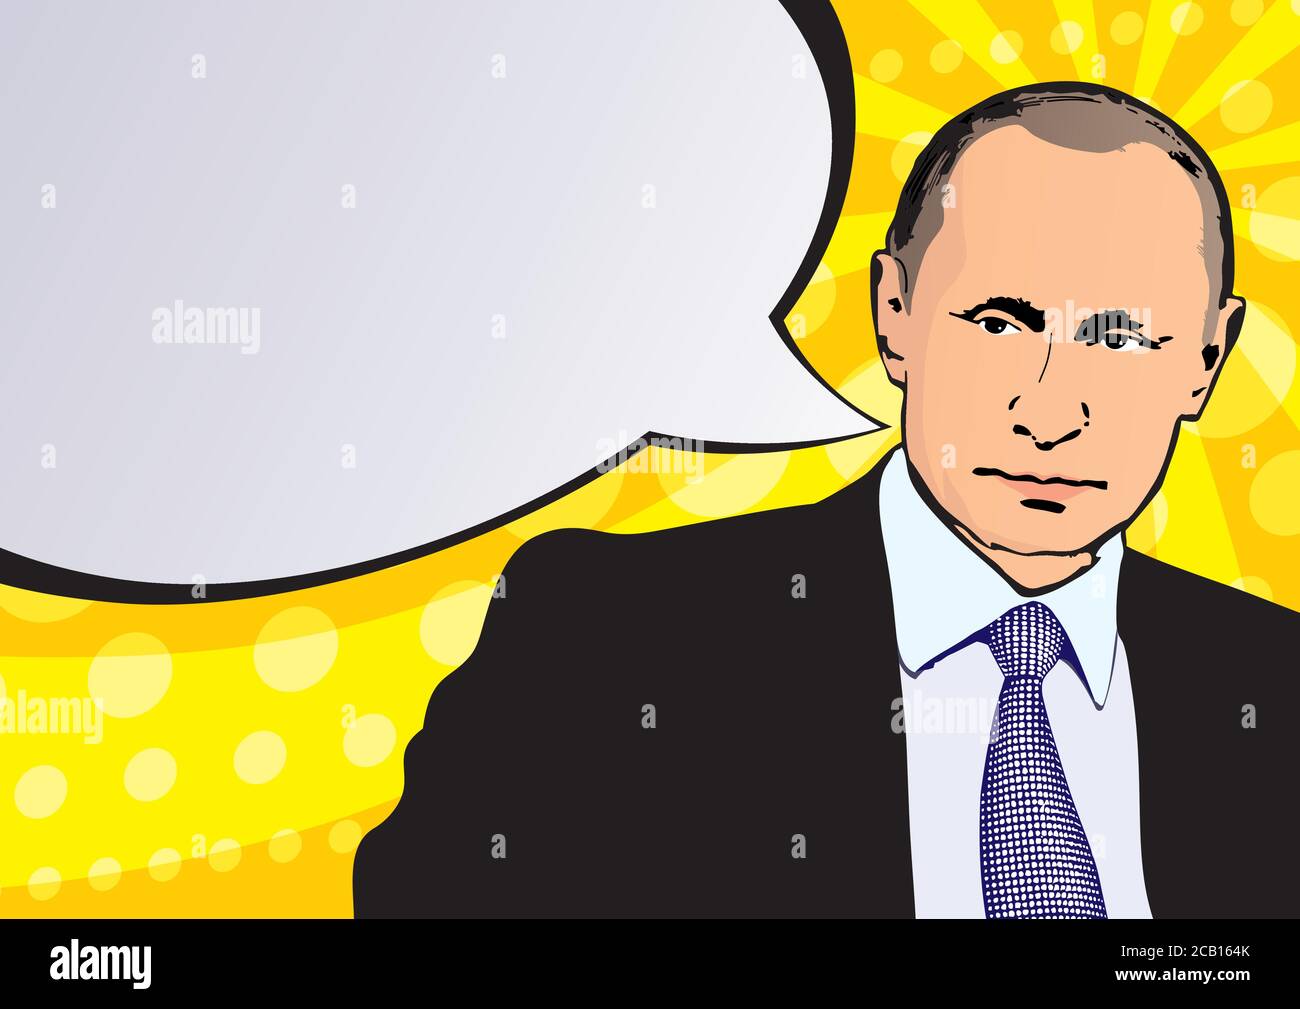 Man very similar to Putin, President of Russia, vector illustration Stock Vector